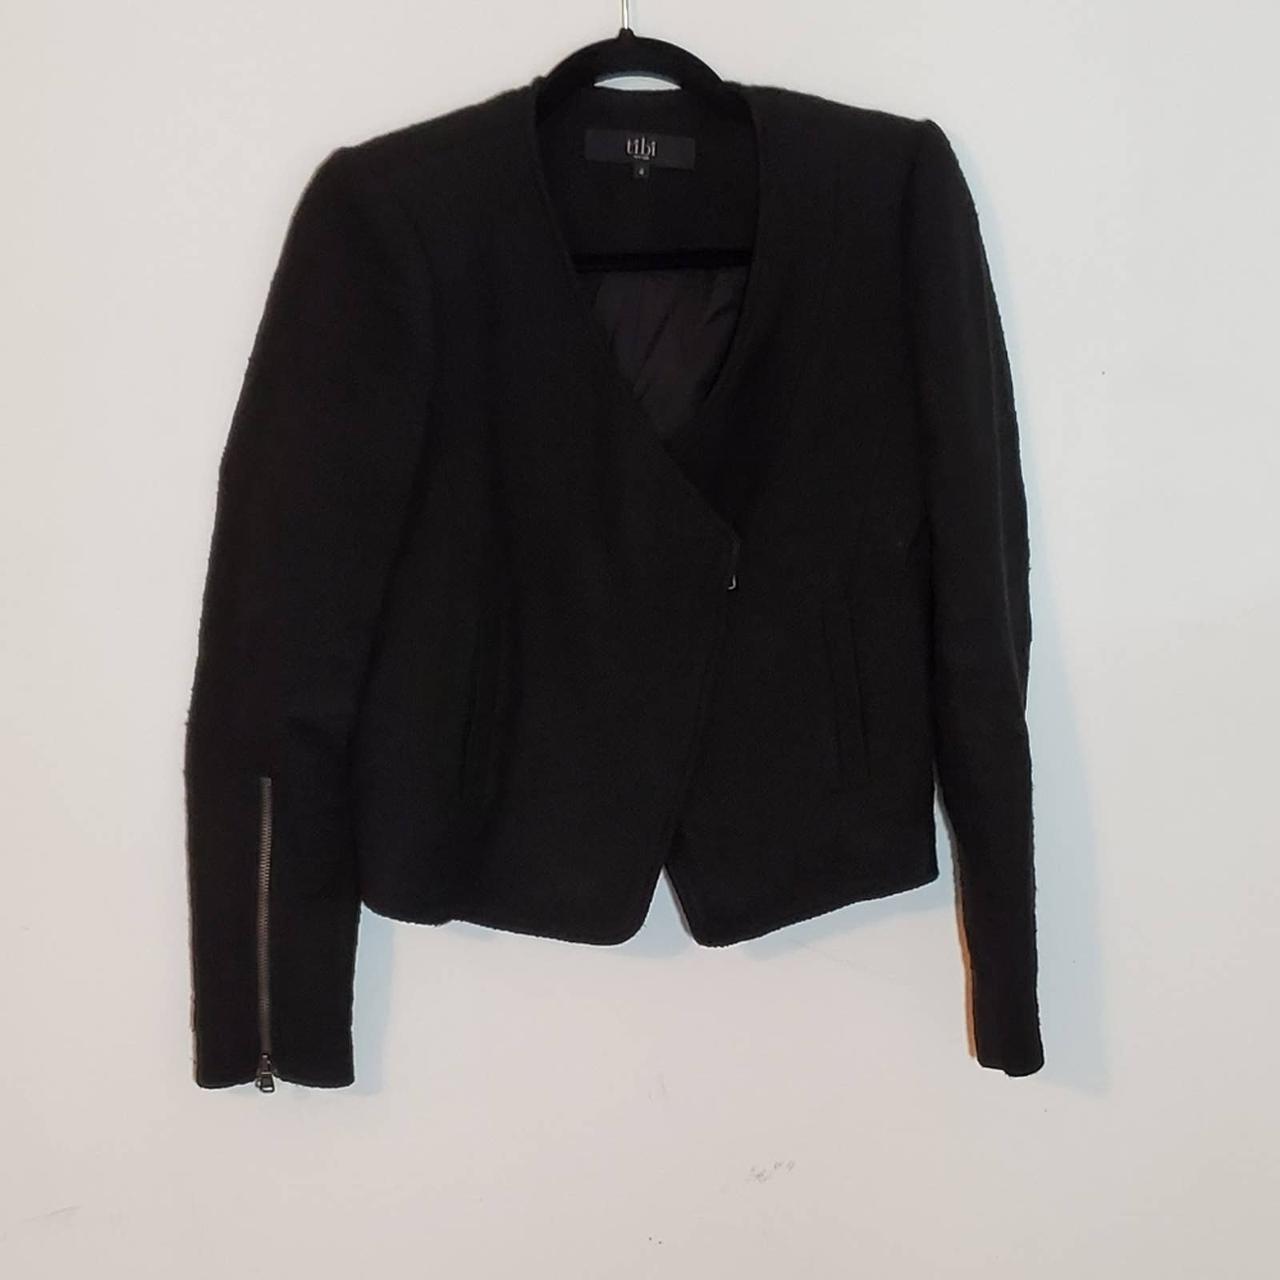 Product Image 2 - Tibi Black Asymmetrical Woven Jacket.
Size